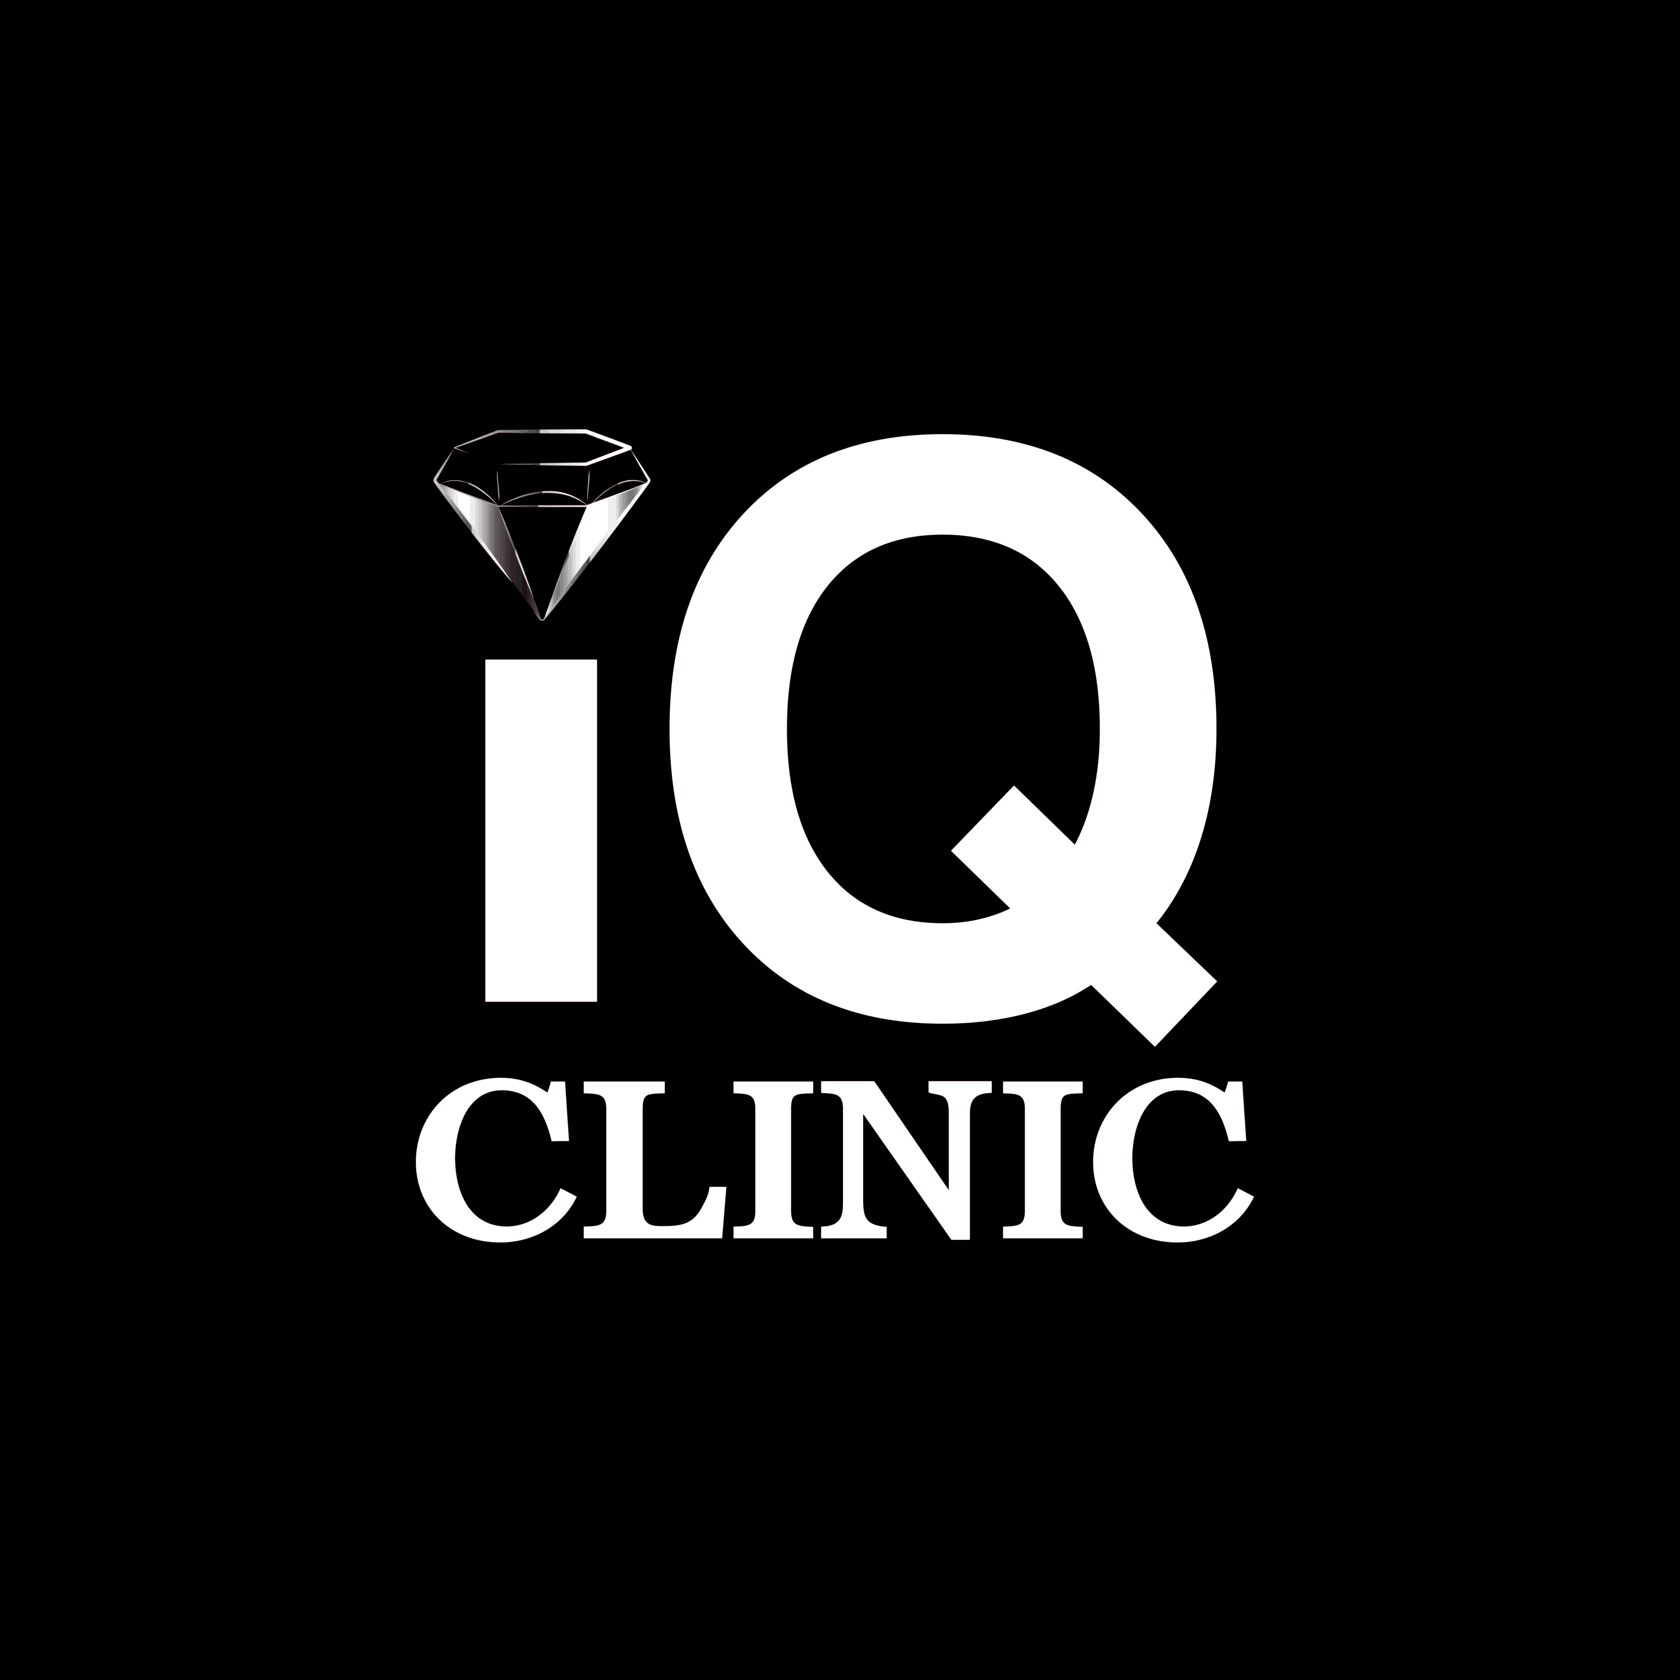 Айкью клиник. Clinic IQ. CLINICIQ стоматология кратко. Клинк Кью Хэппи.